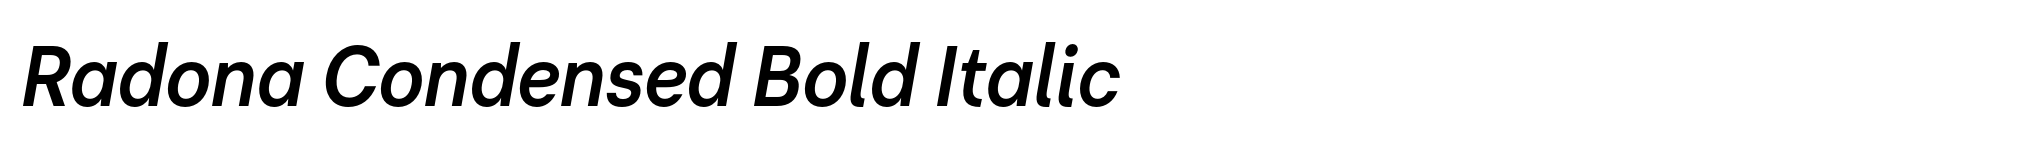 Radona Condensed Bold Italic image